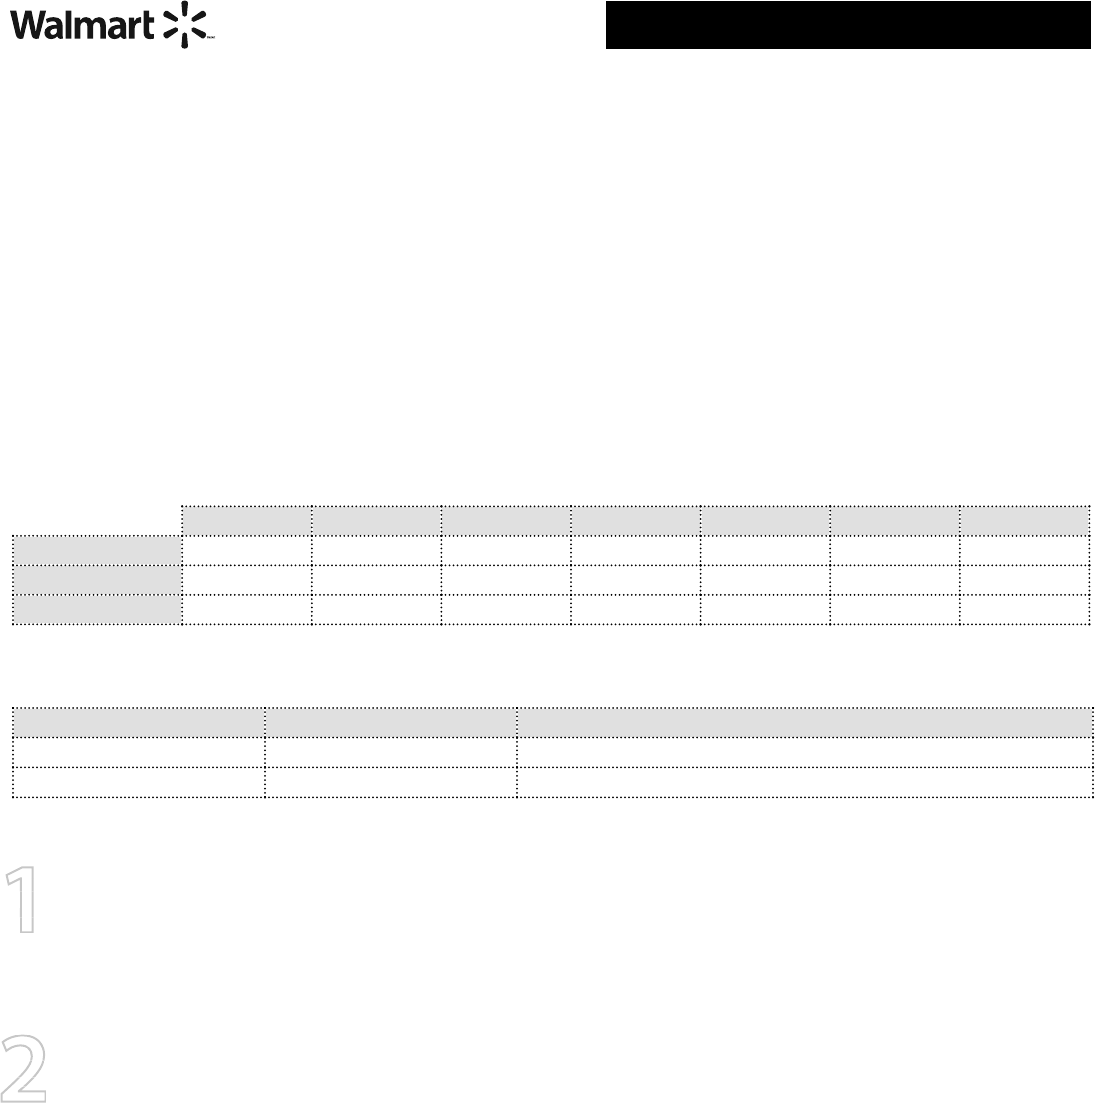 Walmart Application Form